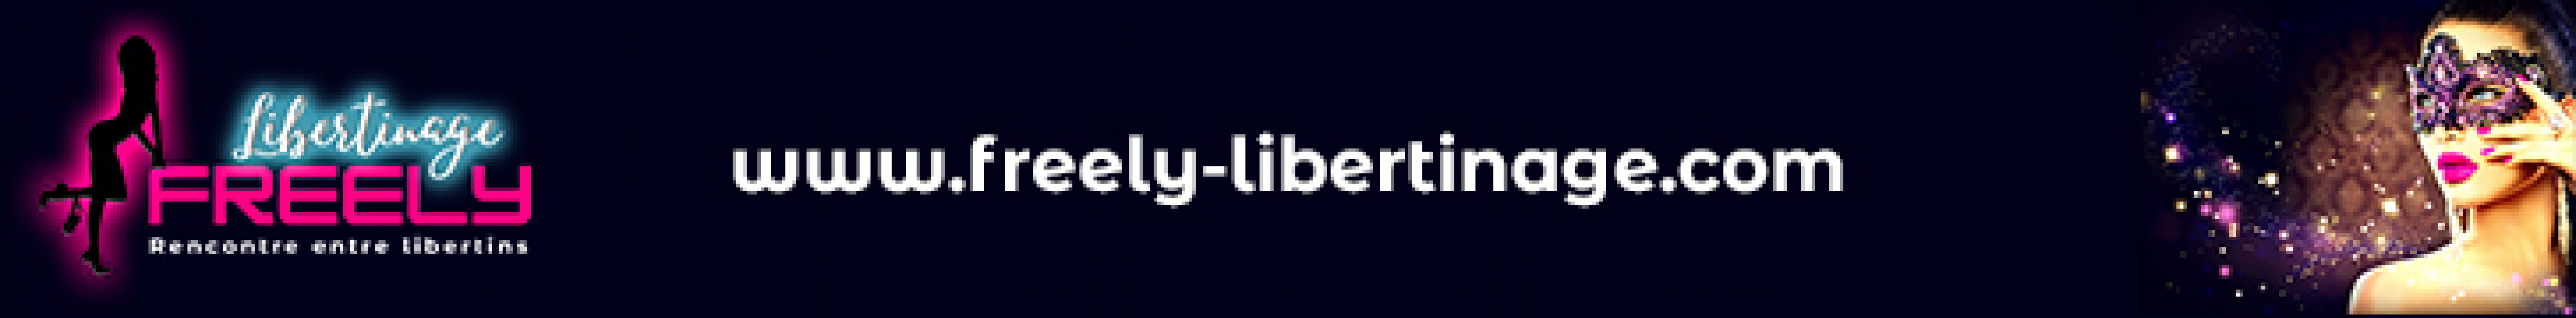 Freely-libertinage